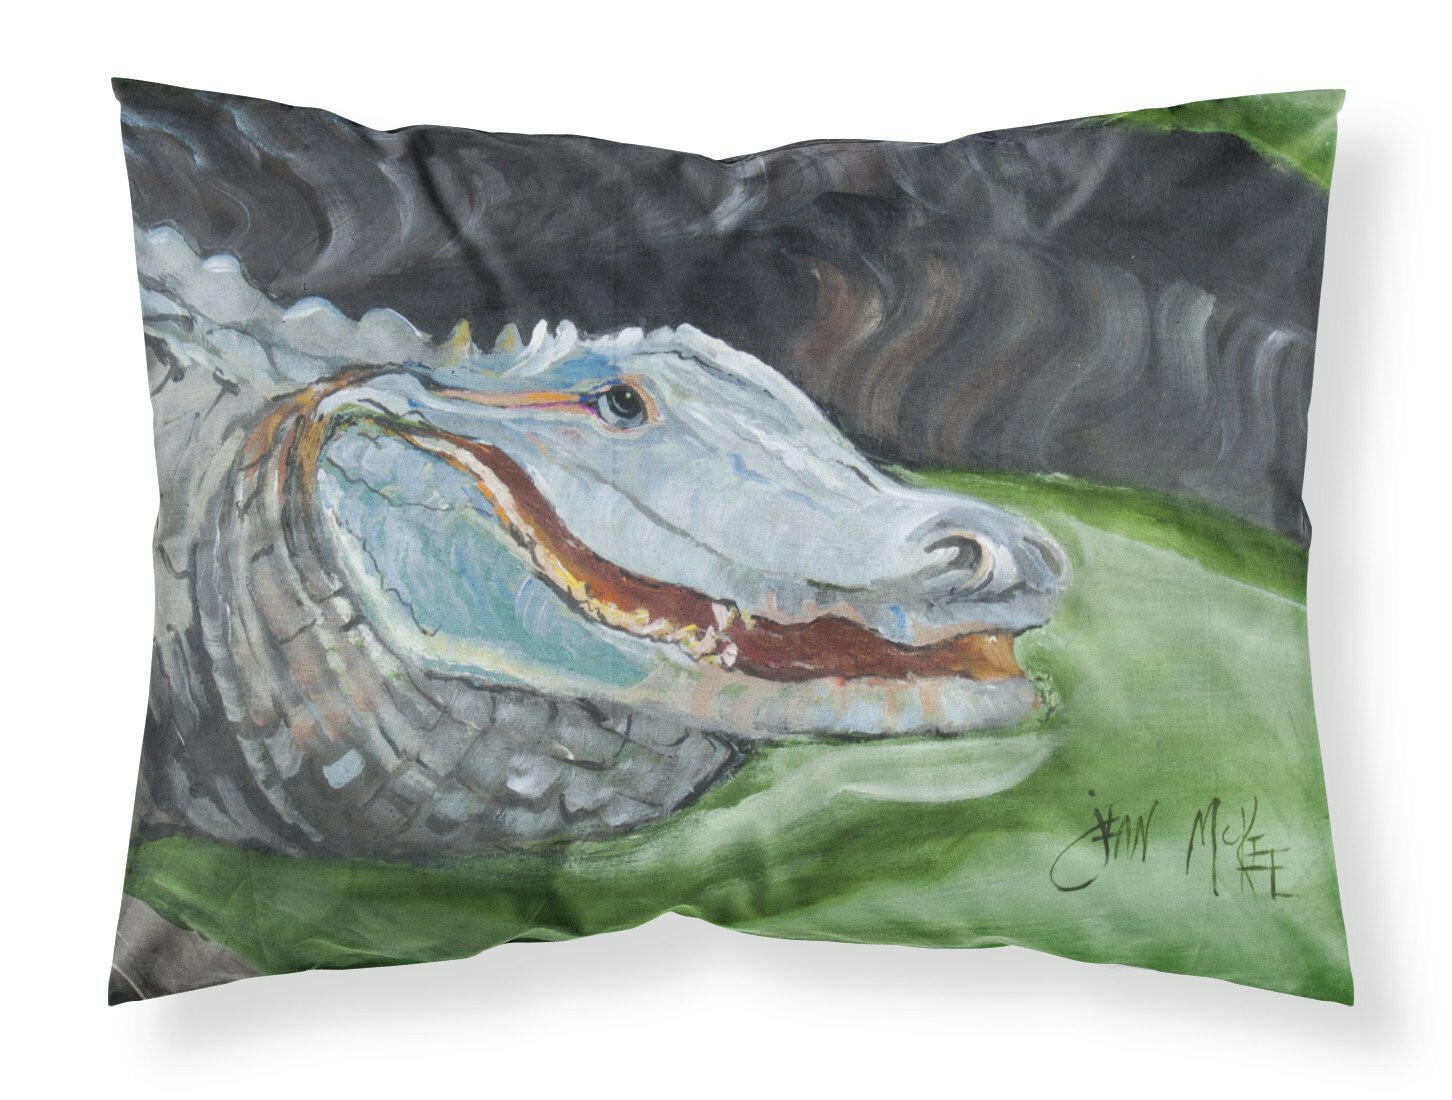 Blue Alligator Fabric Standard Pillowcase JMK1003PILLOWCASE by Caroline's Treasures